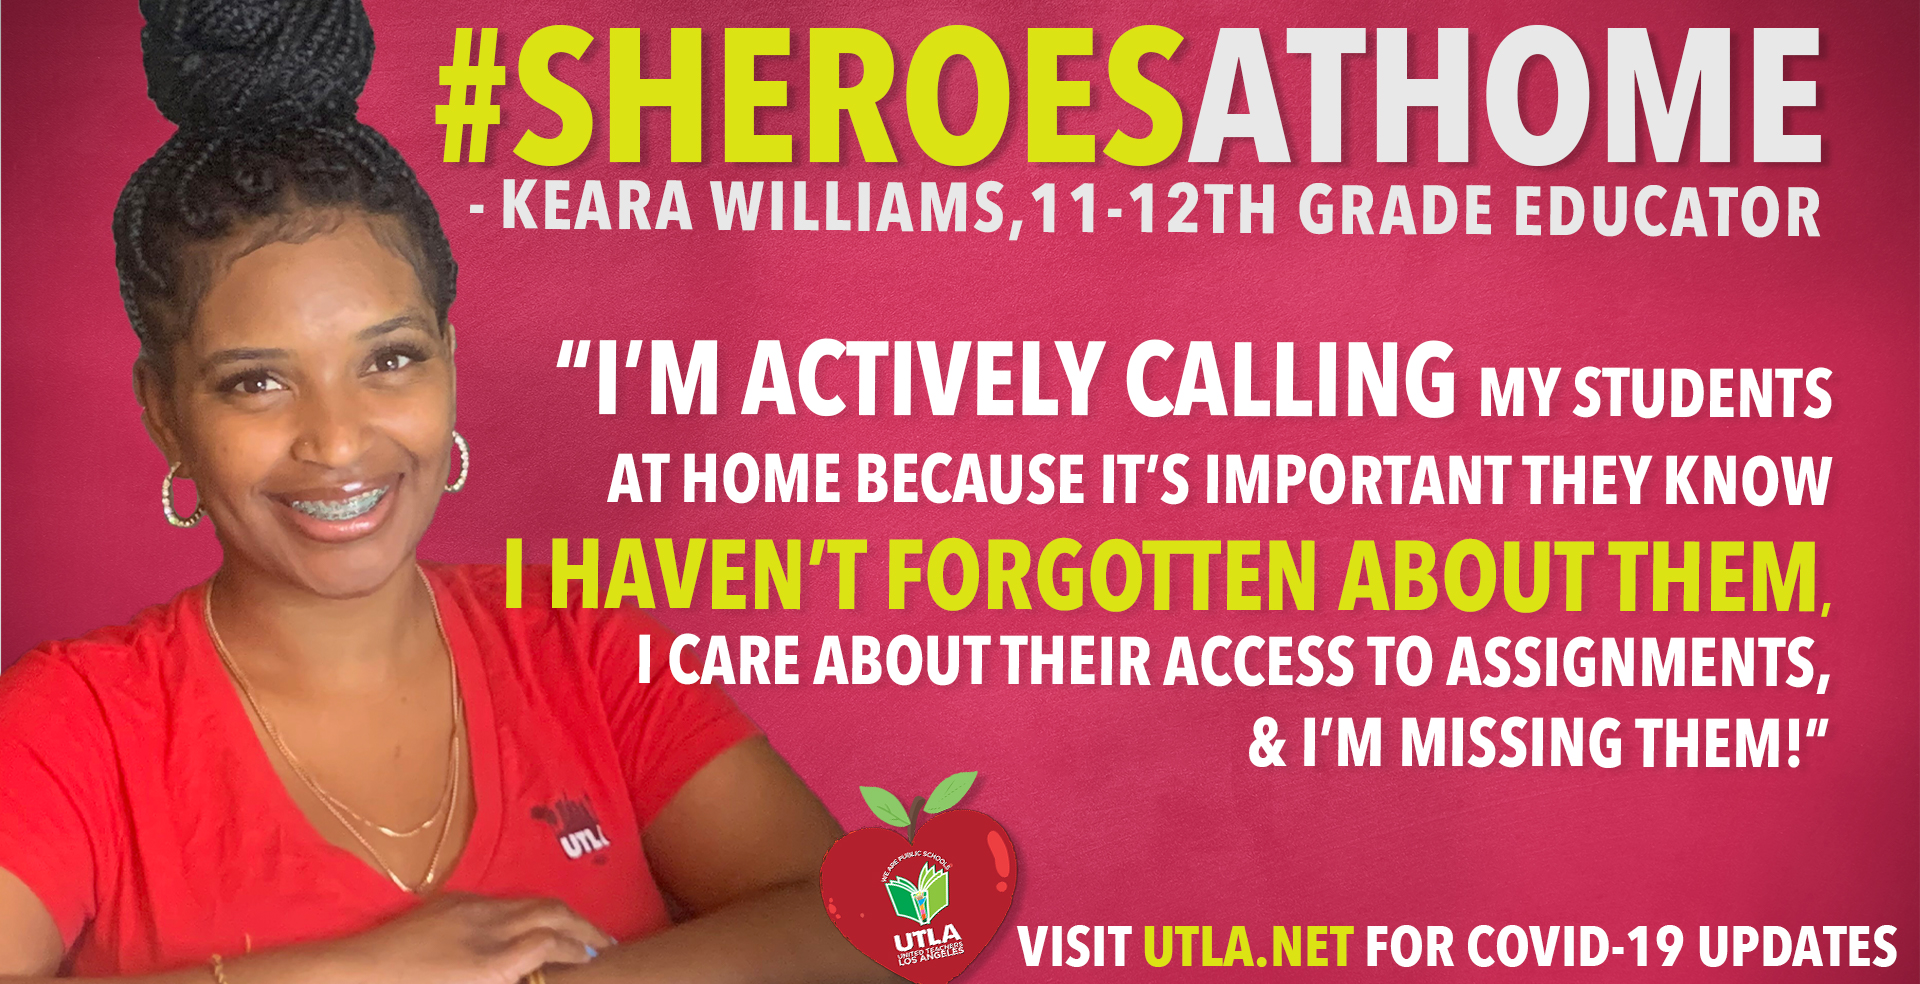 Meme calling Keara Williams a "she-ro" for calling her students